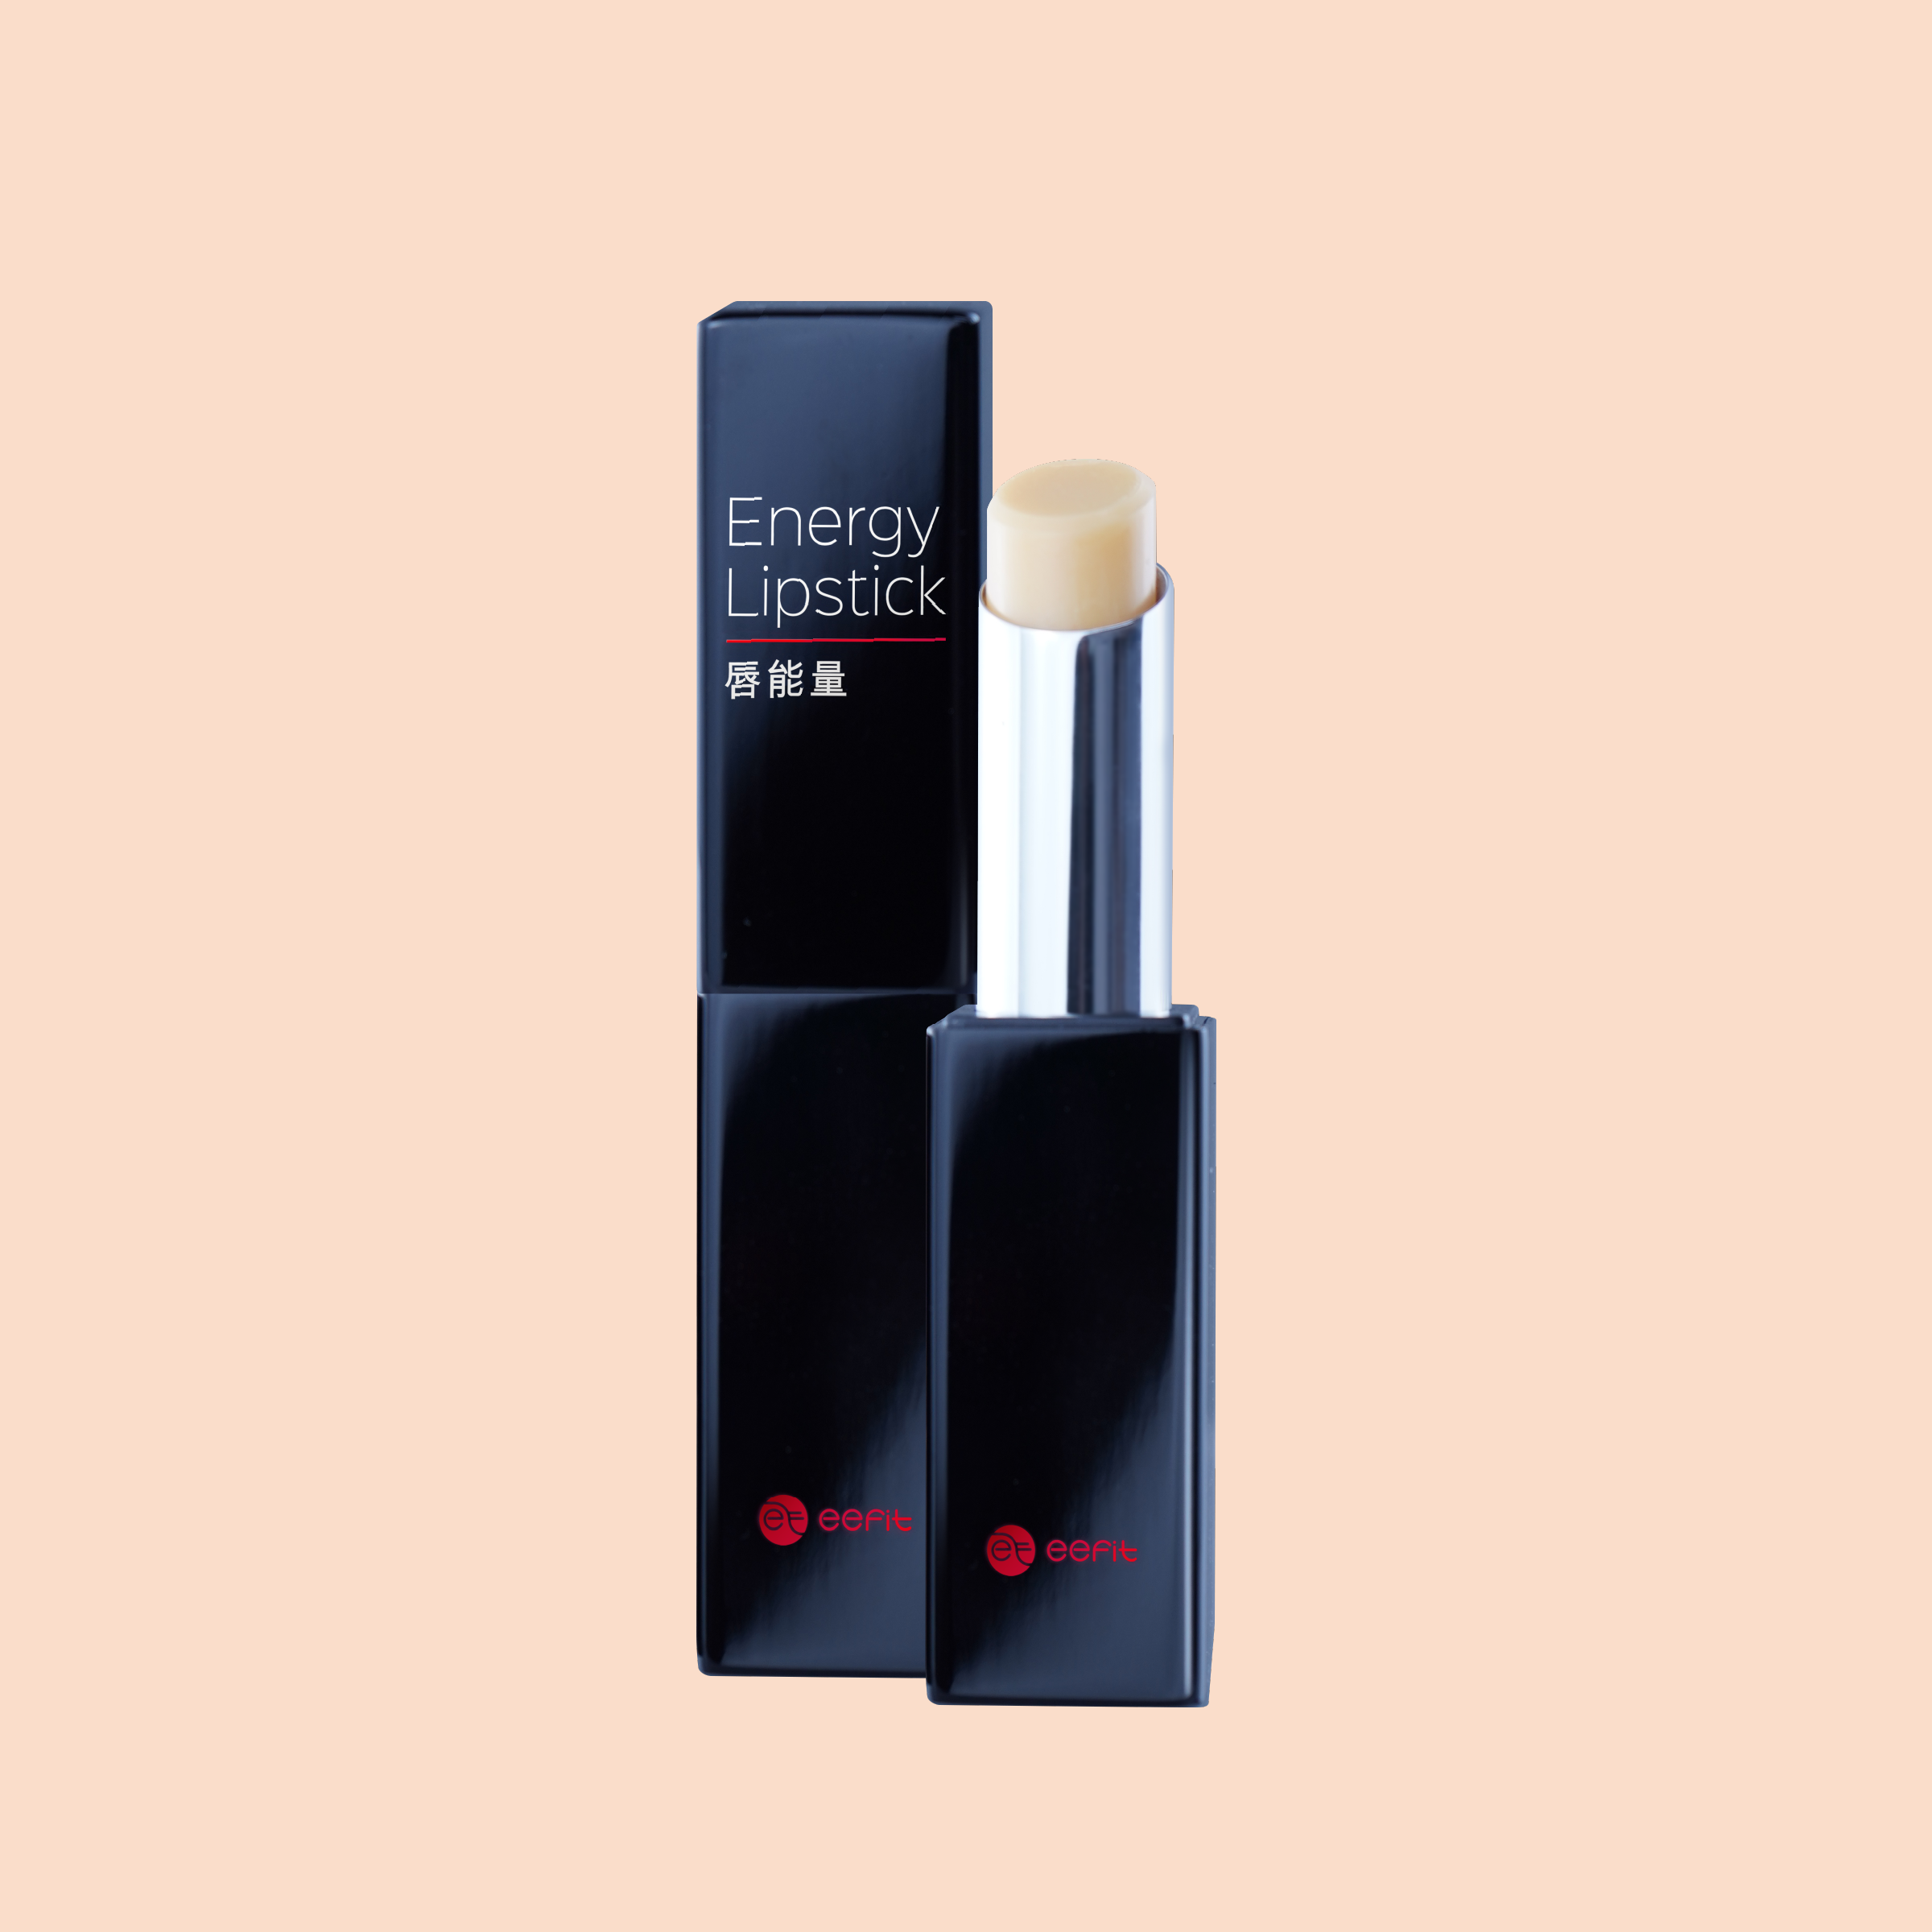 Energy Lipstick Product Frame New